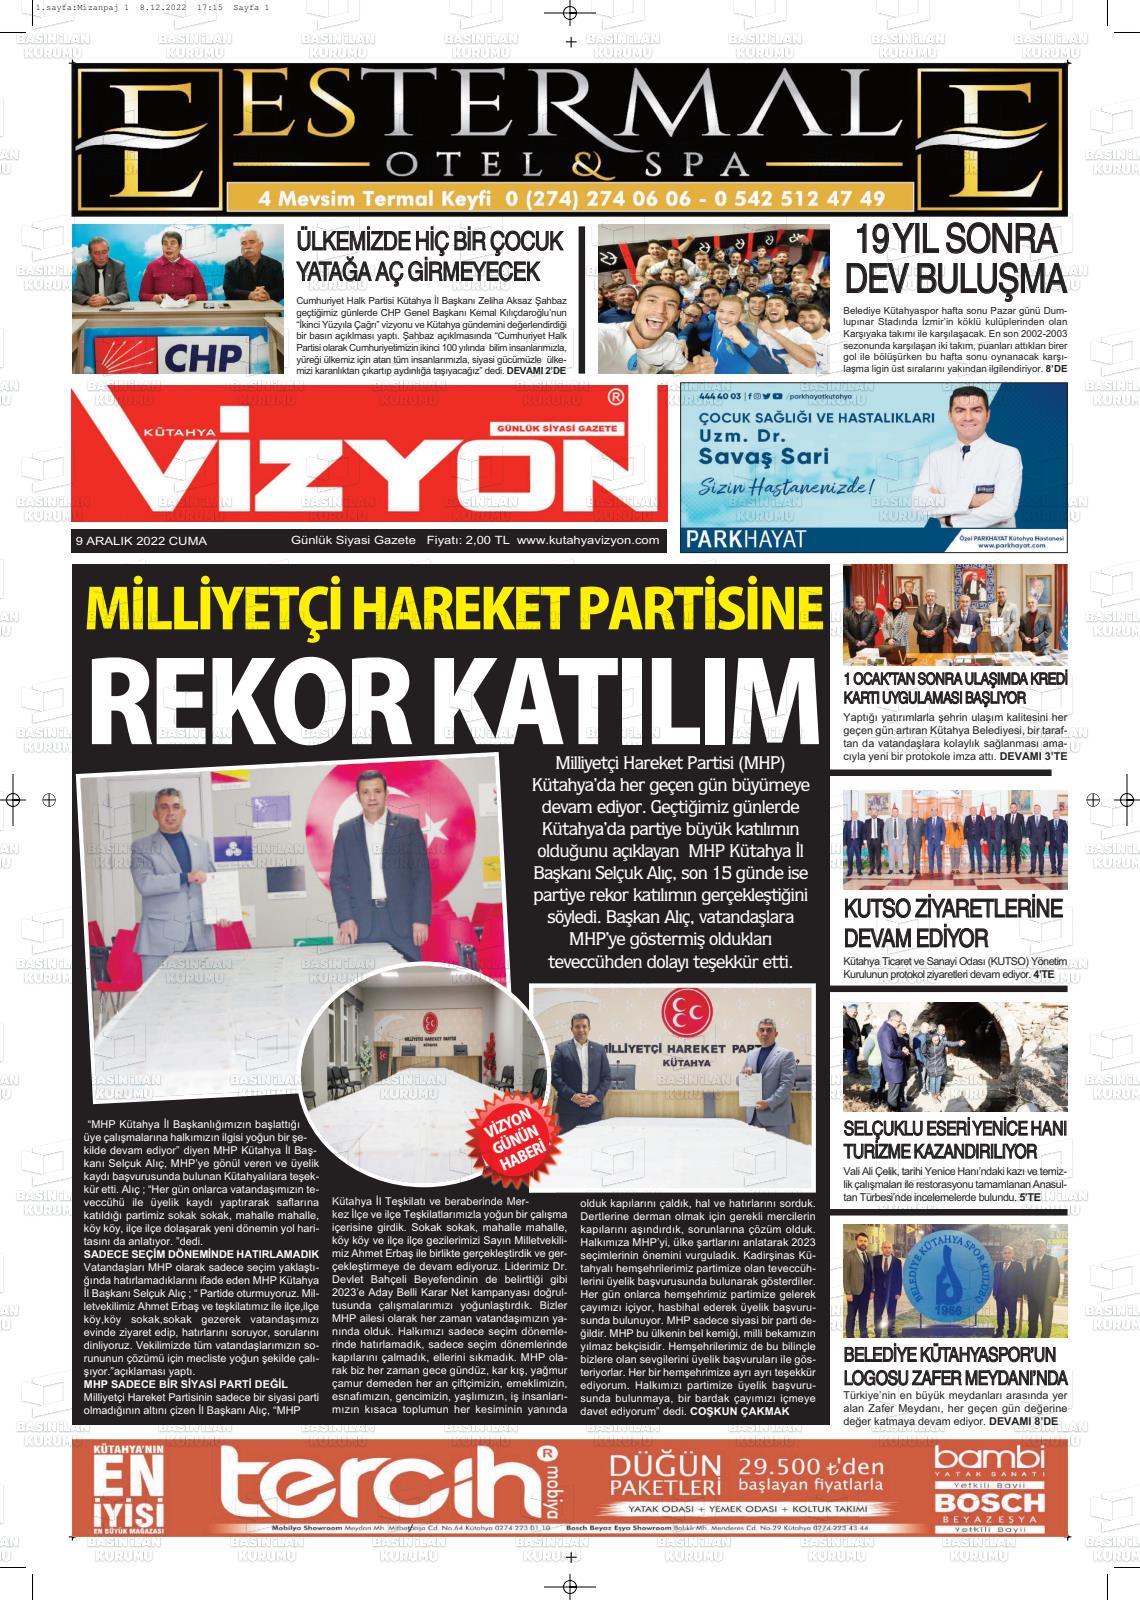 09 Aralık 2022 Kütahya Vizyon Gazete Manşeti